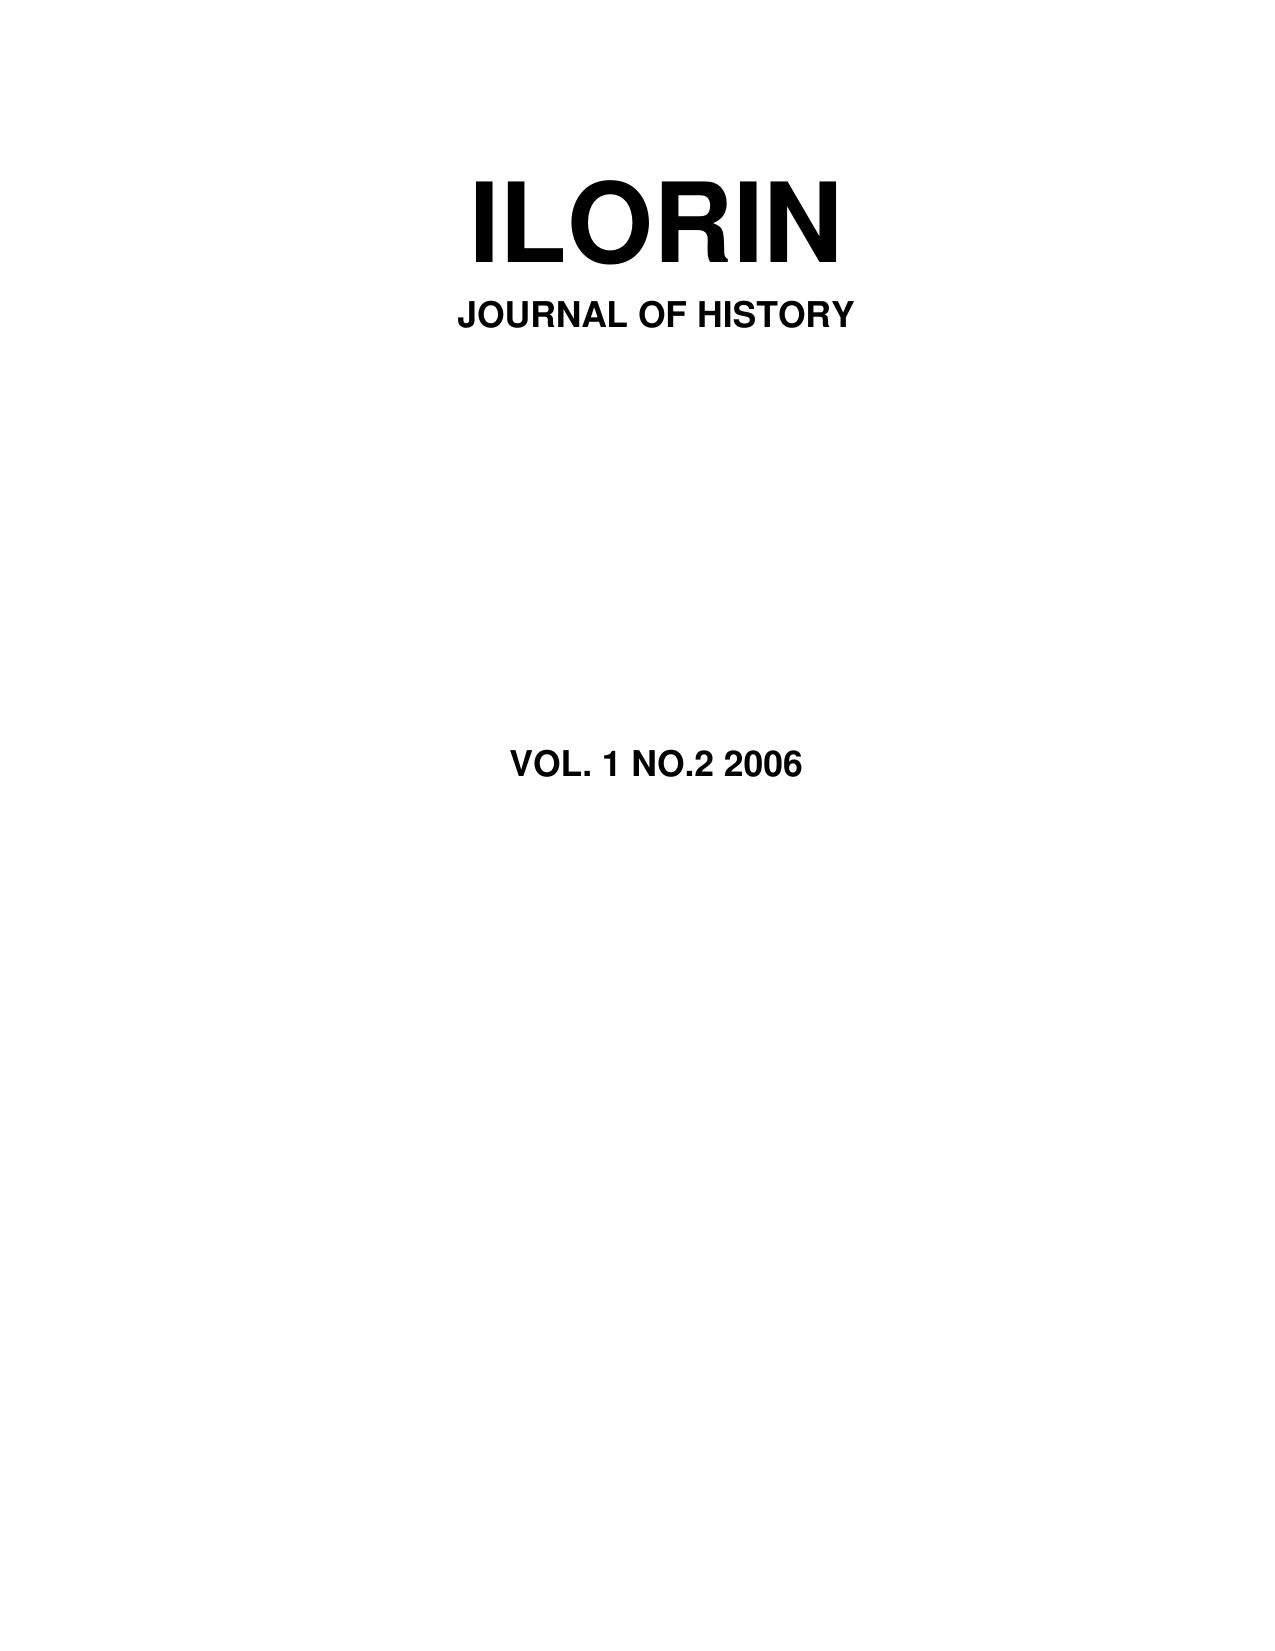 Ilorin Journal of History, Vol